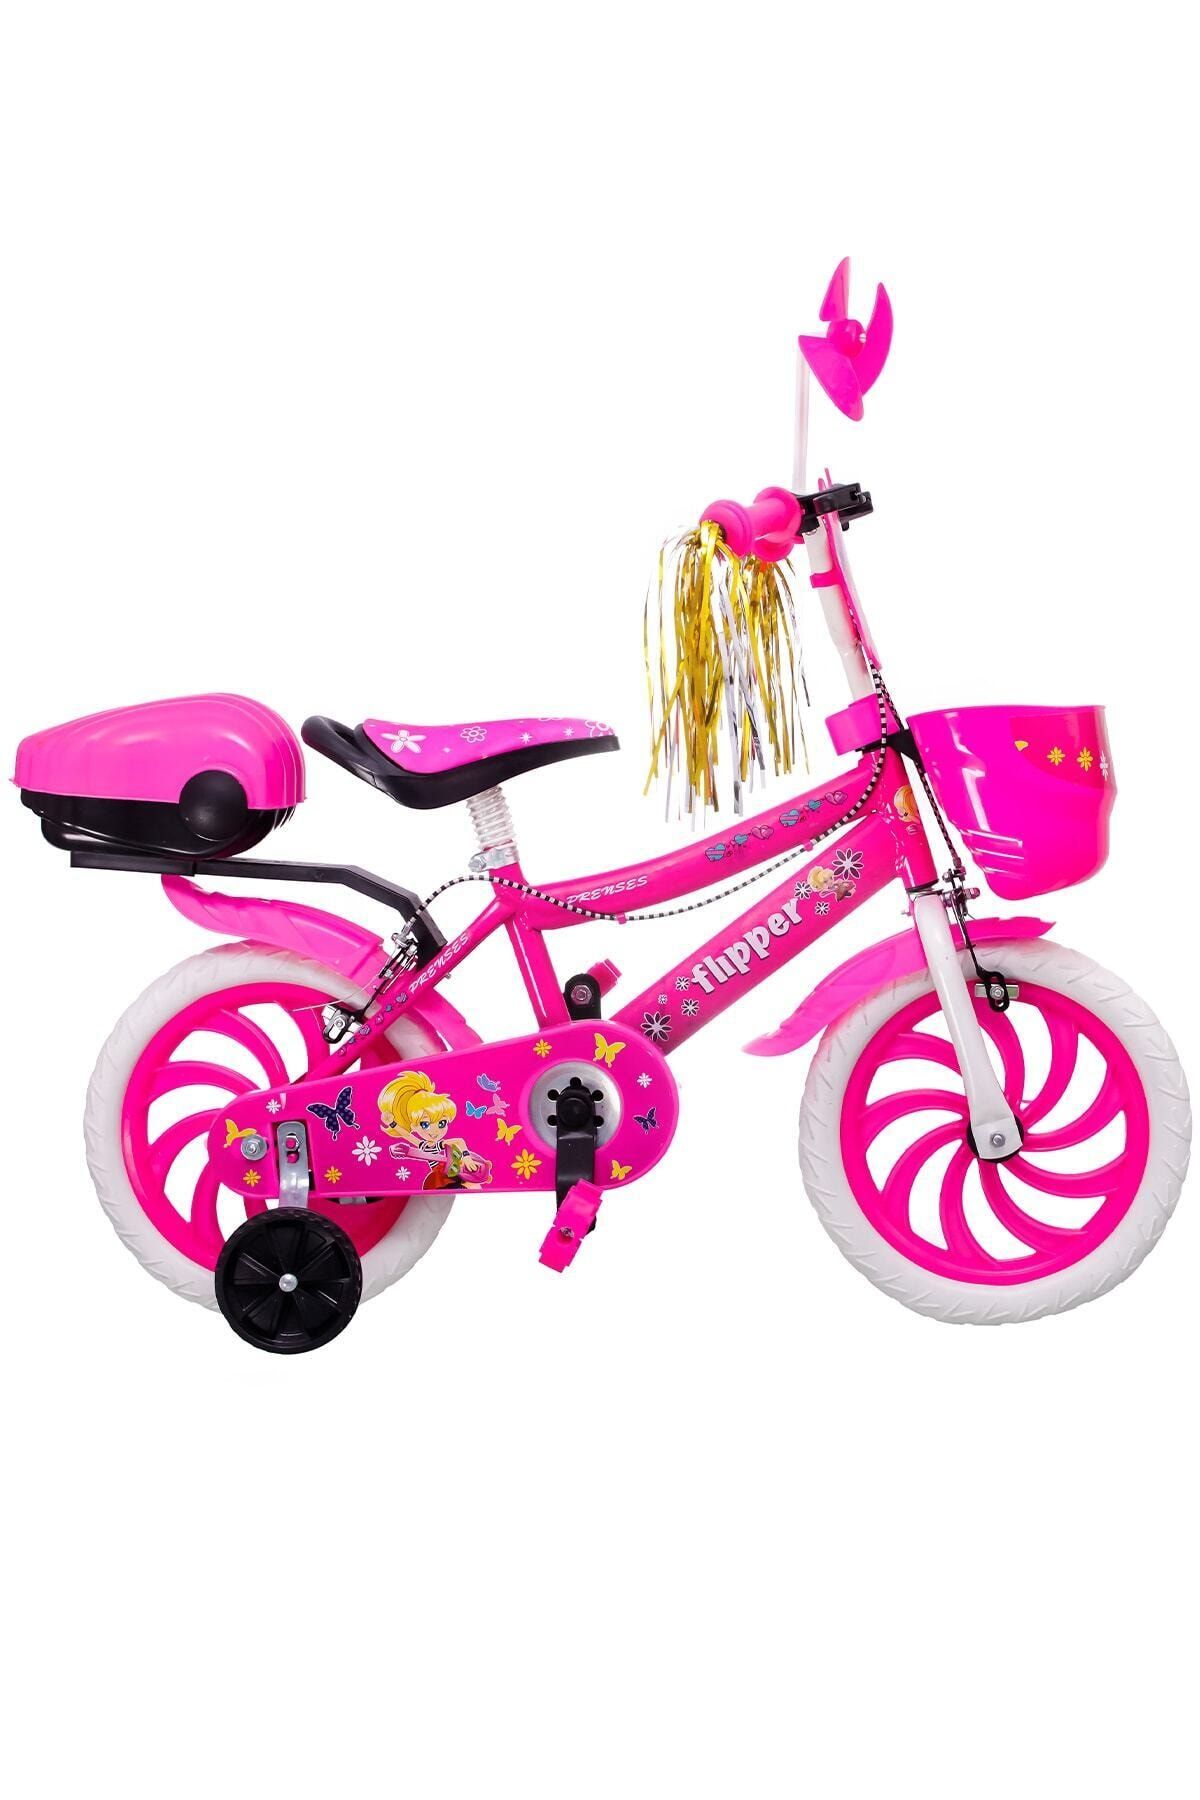 Holly Pembe Kız Çocuk Bisikleti 15 Jant 2021 Yeni Sezon 4-5-6-7 Yaş